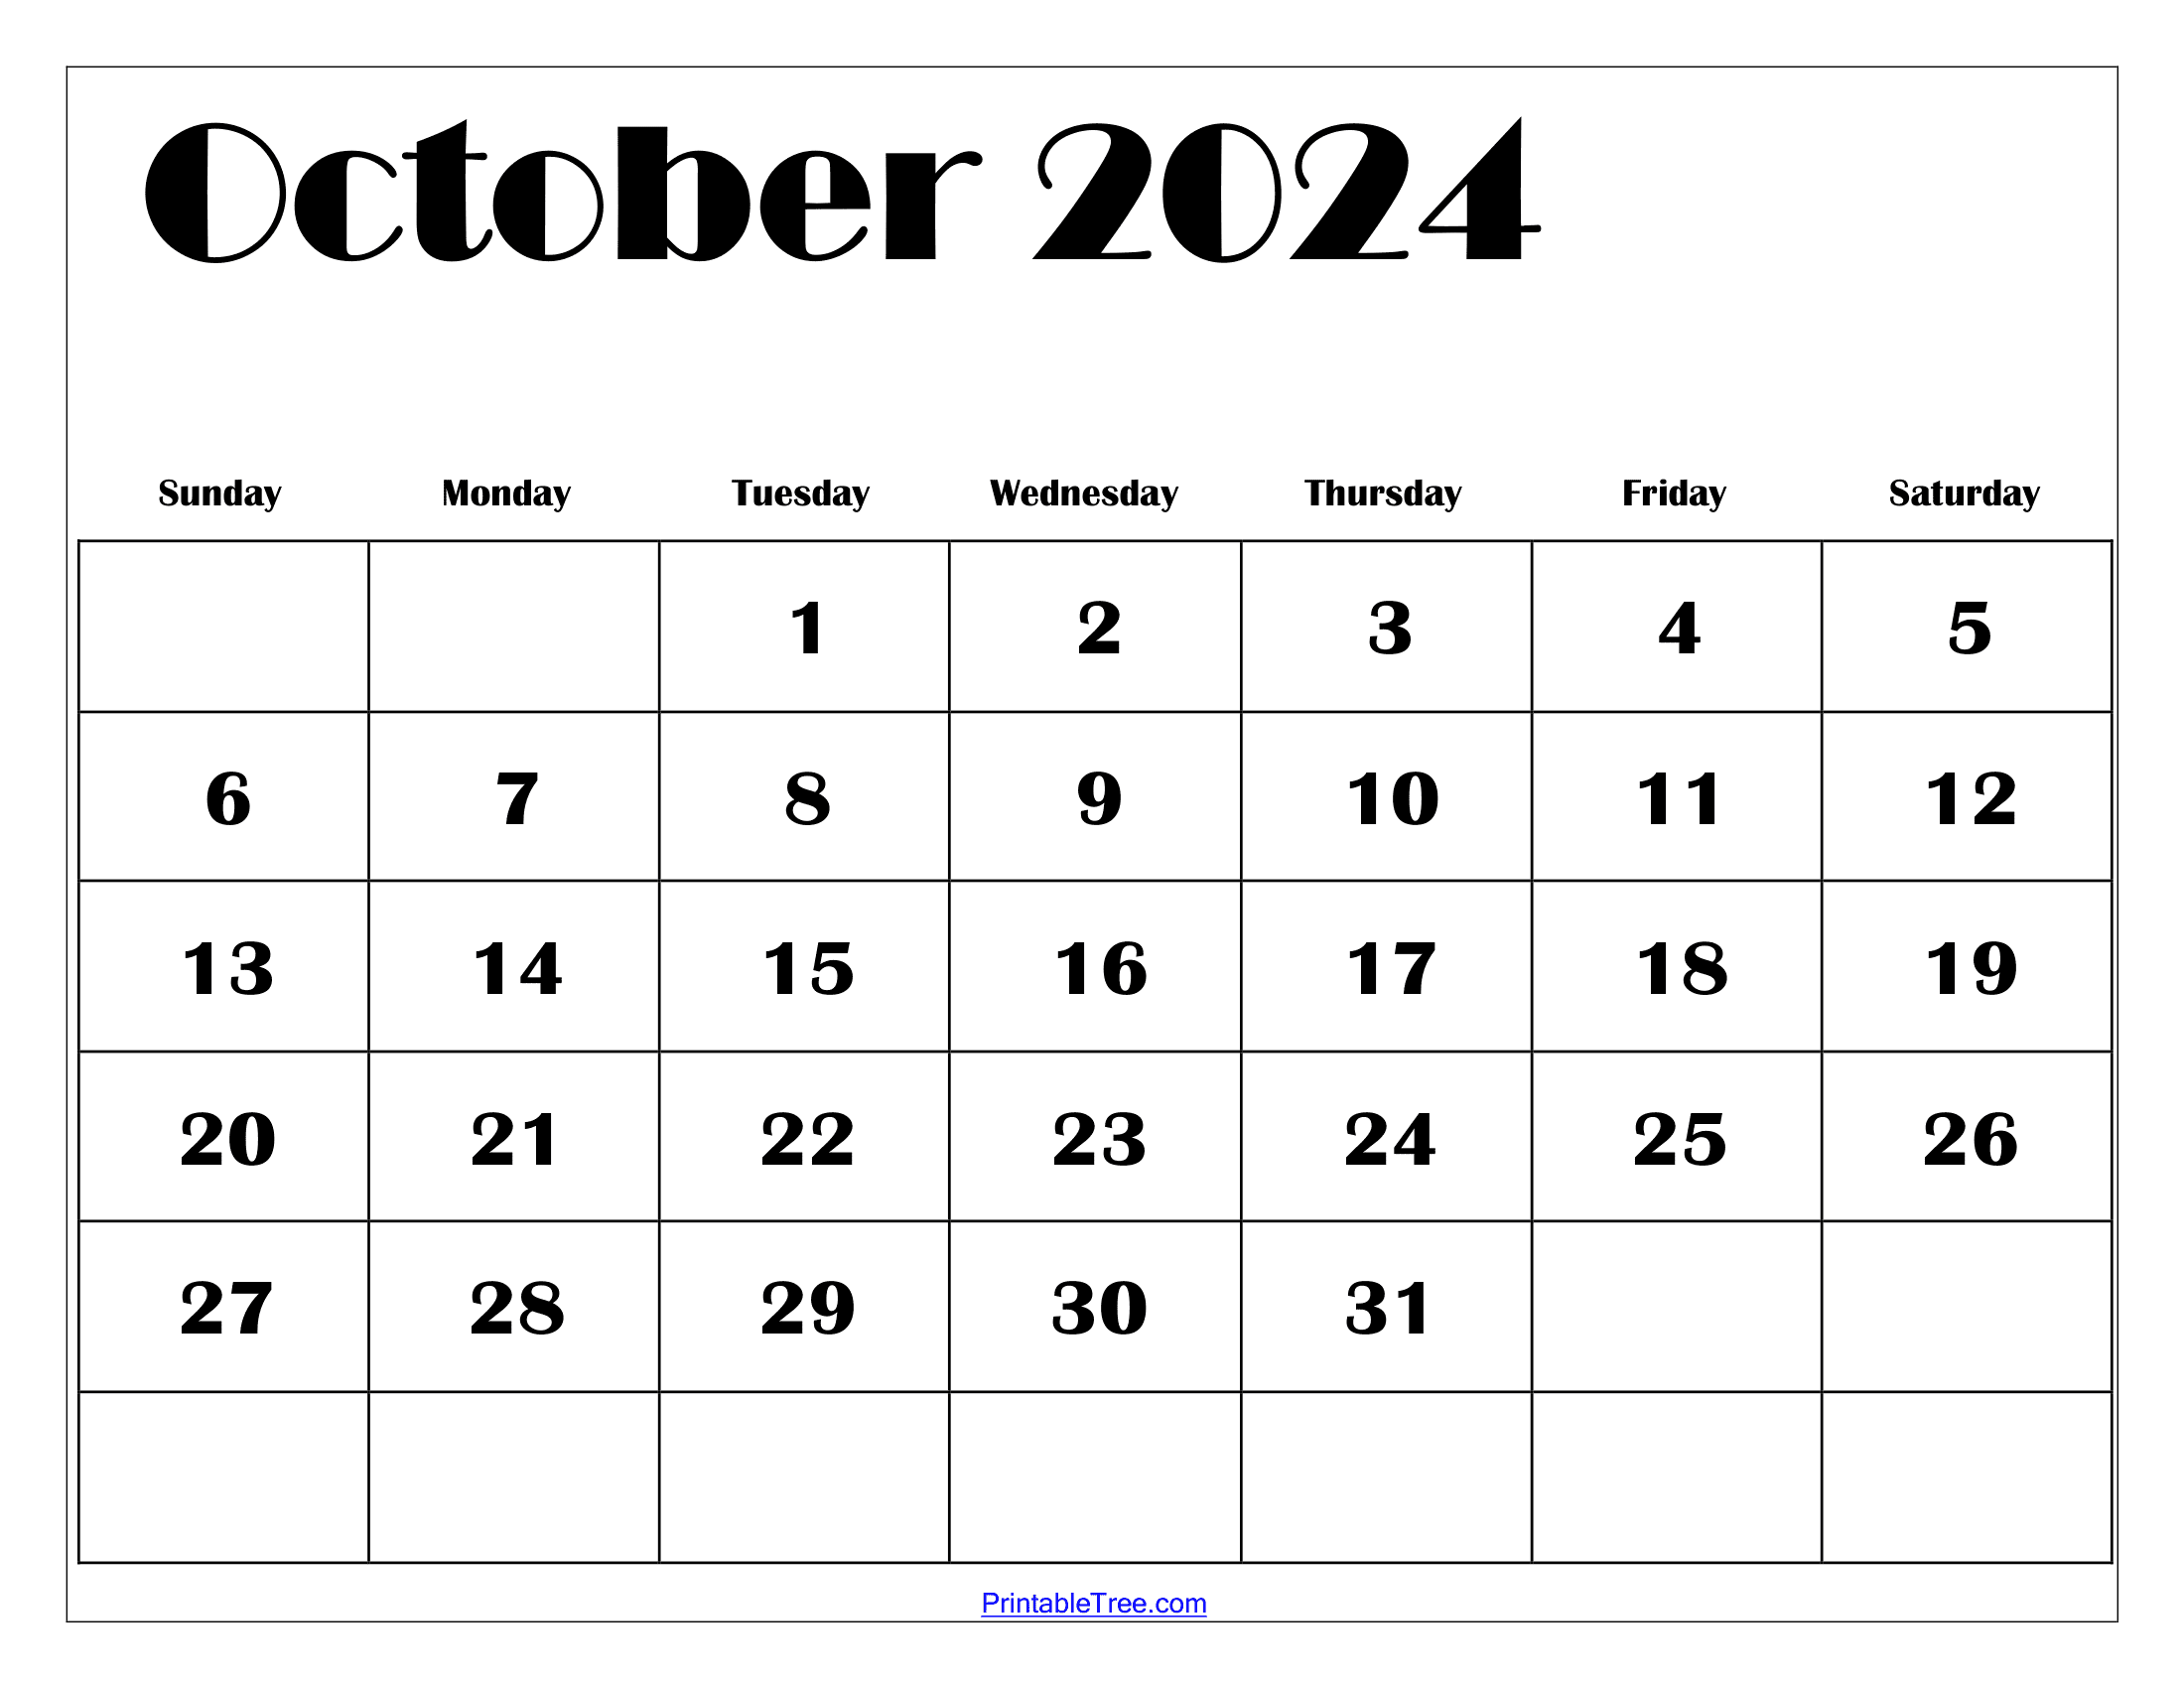 October 2024 Calendar Printable Pdf Free Templates With Holidays for October 2024 Calendar Printable